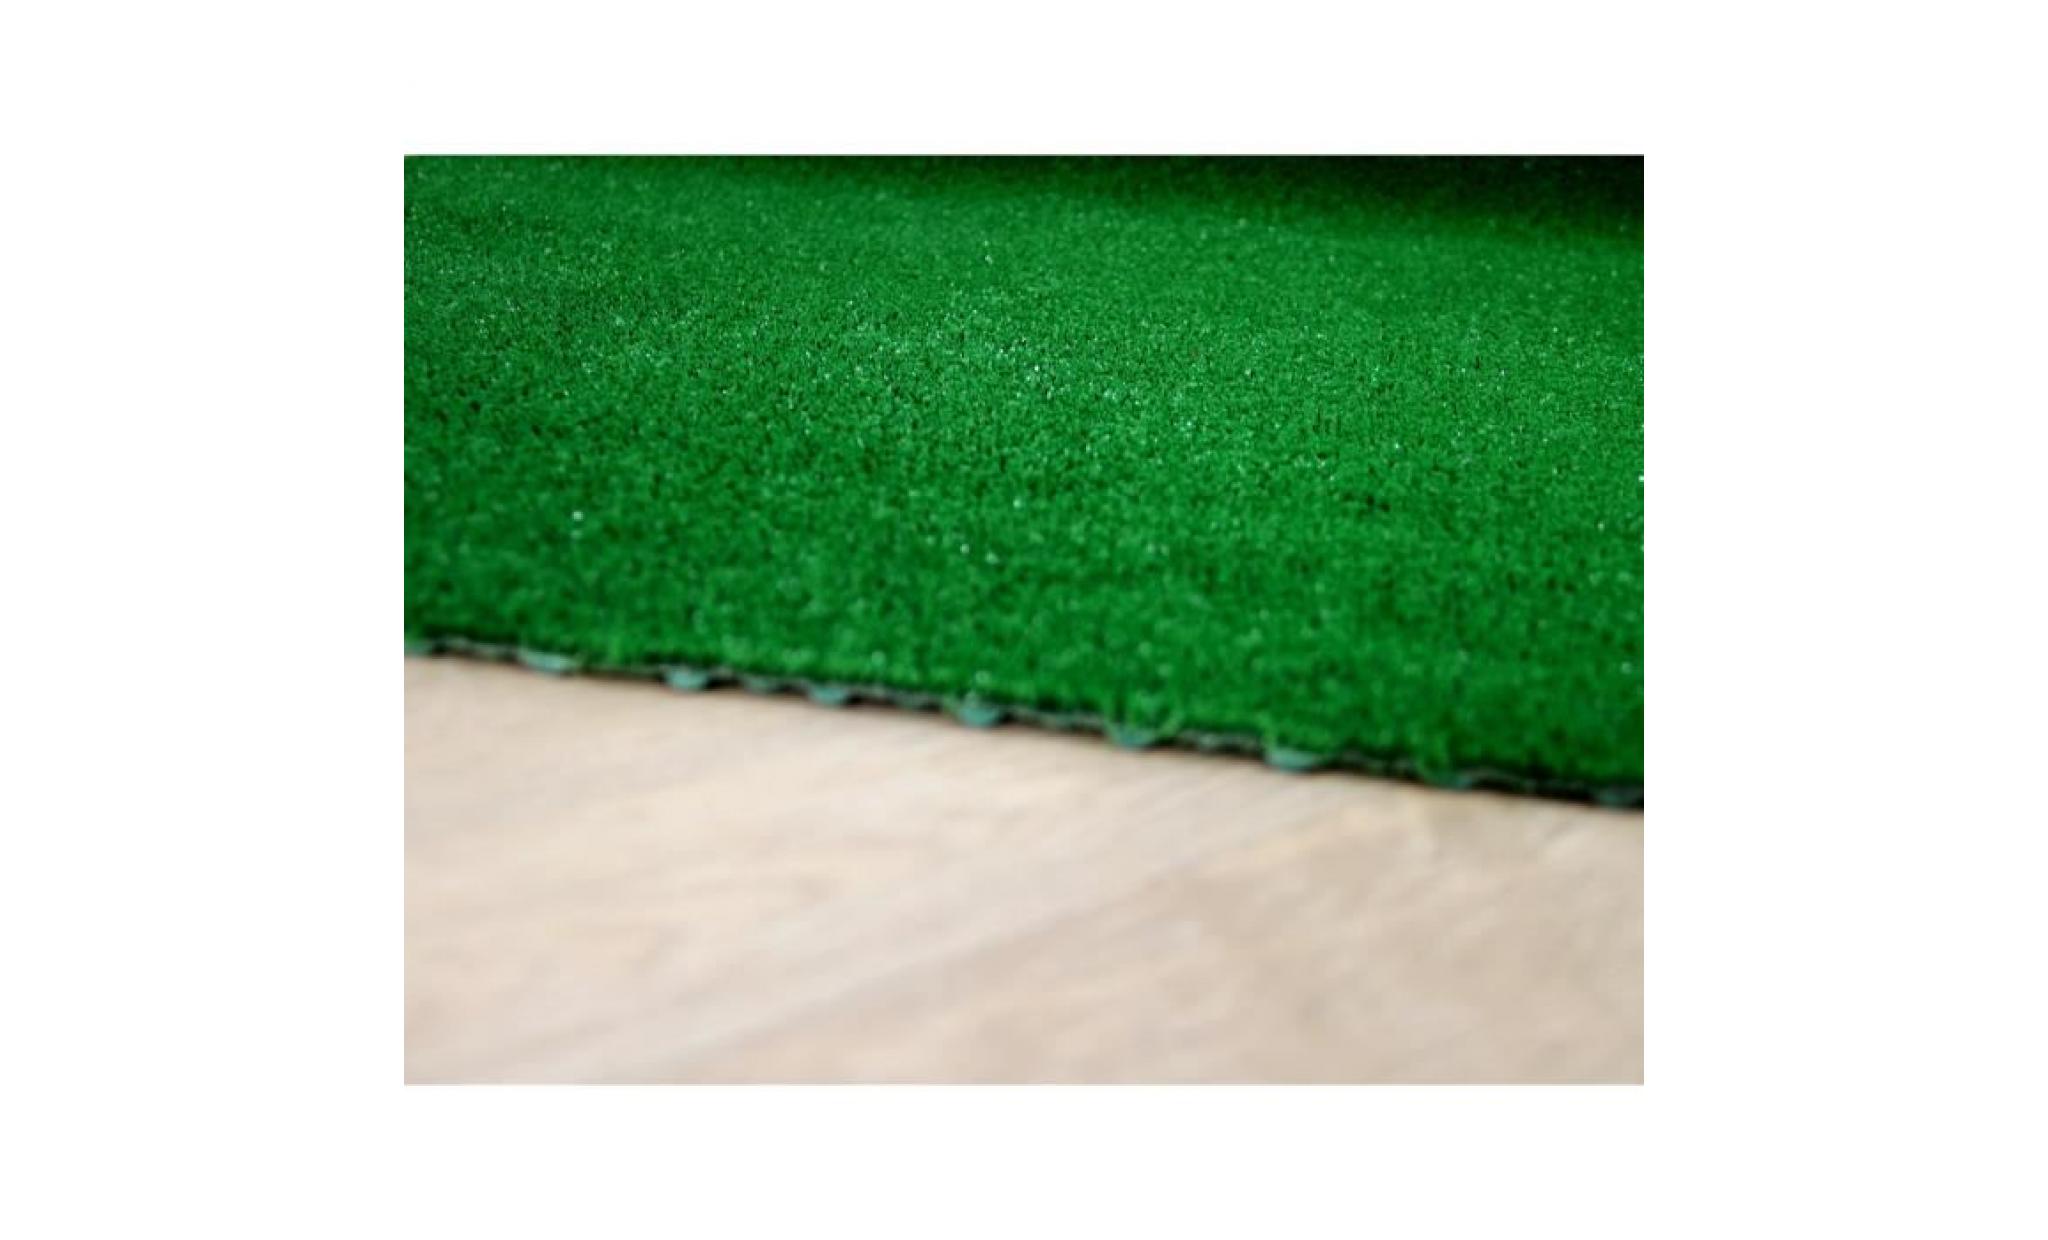 york   tapis type gazon artificiel avec nubs – pour jardin, terrasse, balcon   vert   [200x350 cm] pas cher